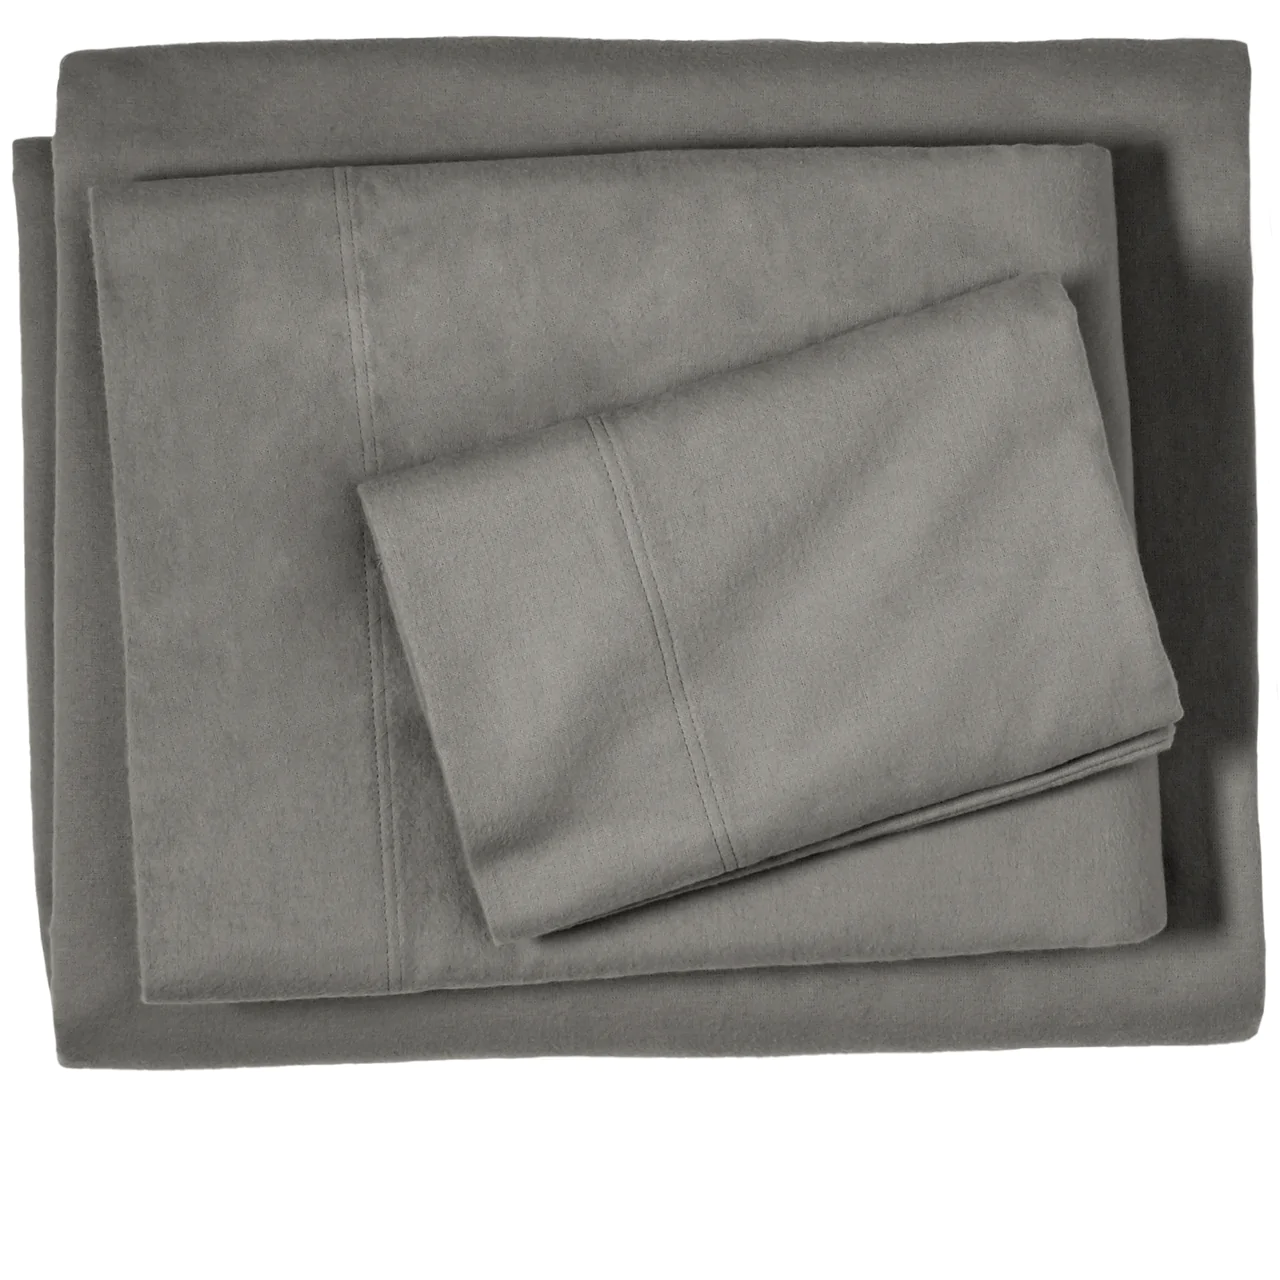 Bare flannel cotton sheet set